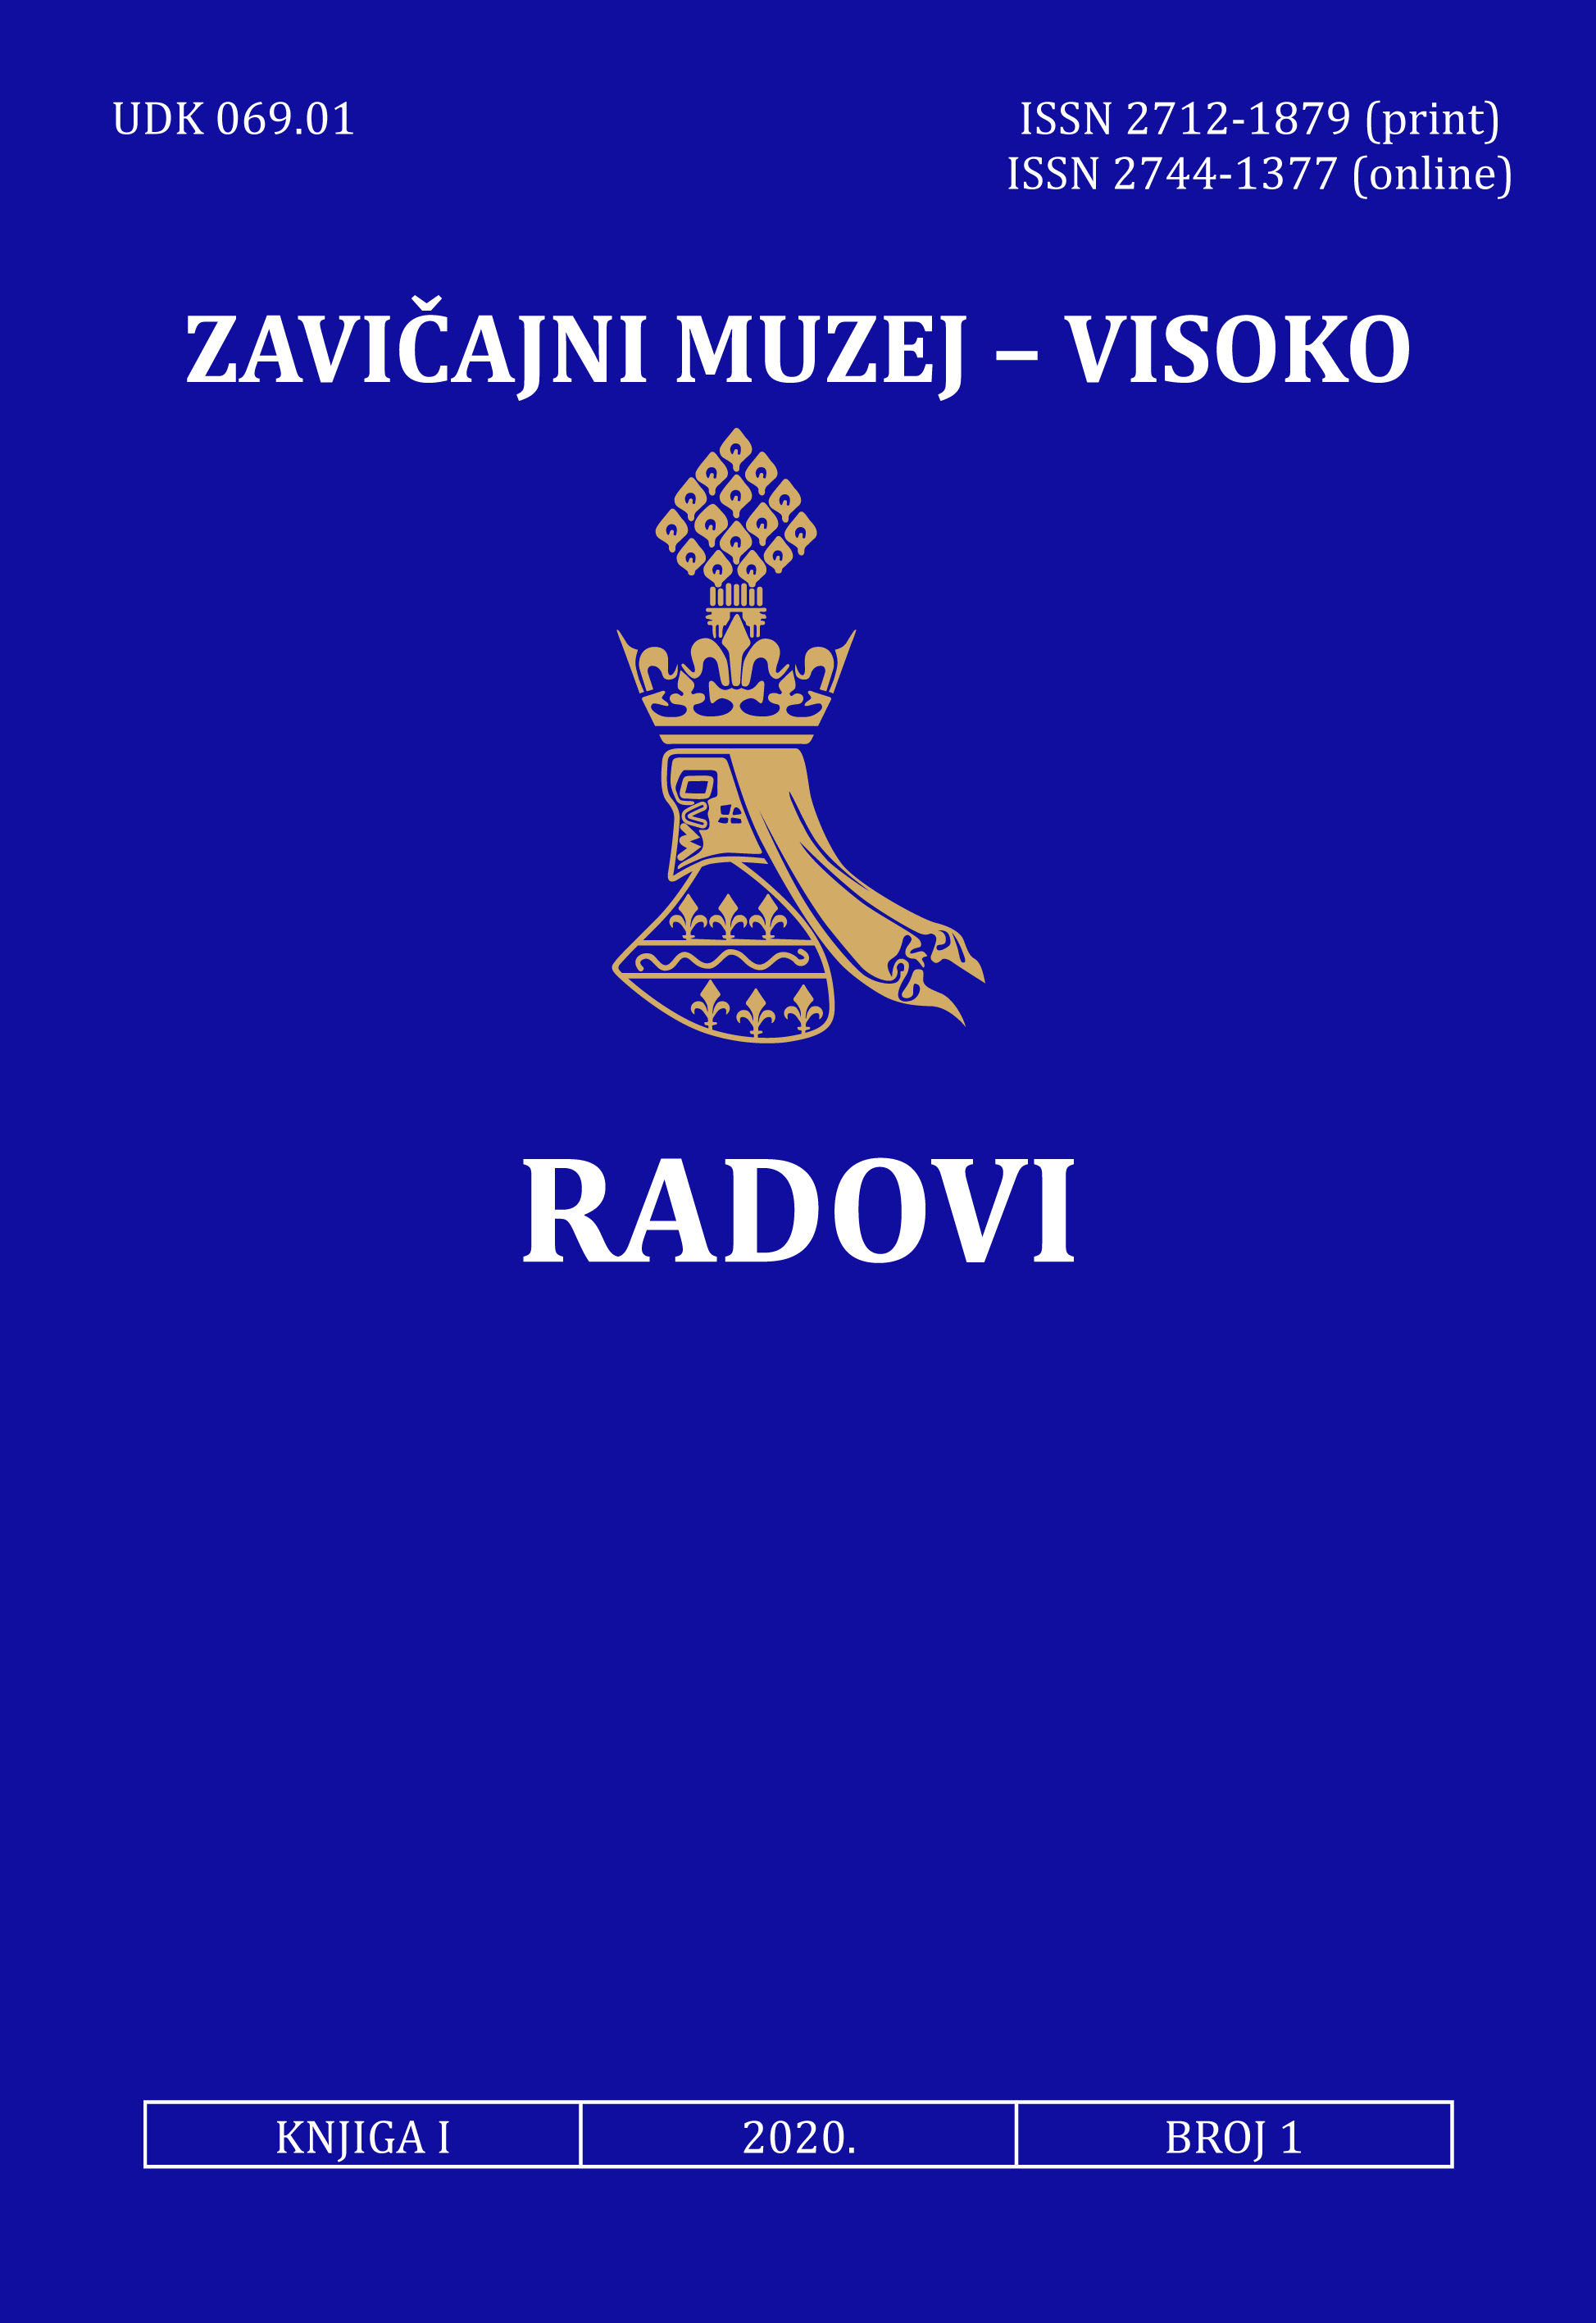 Proceedings of the Regional museum - Visoko